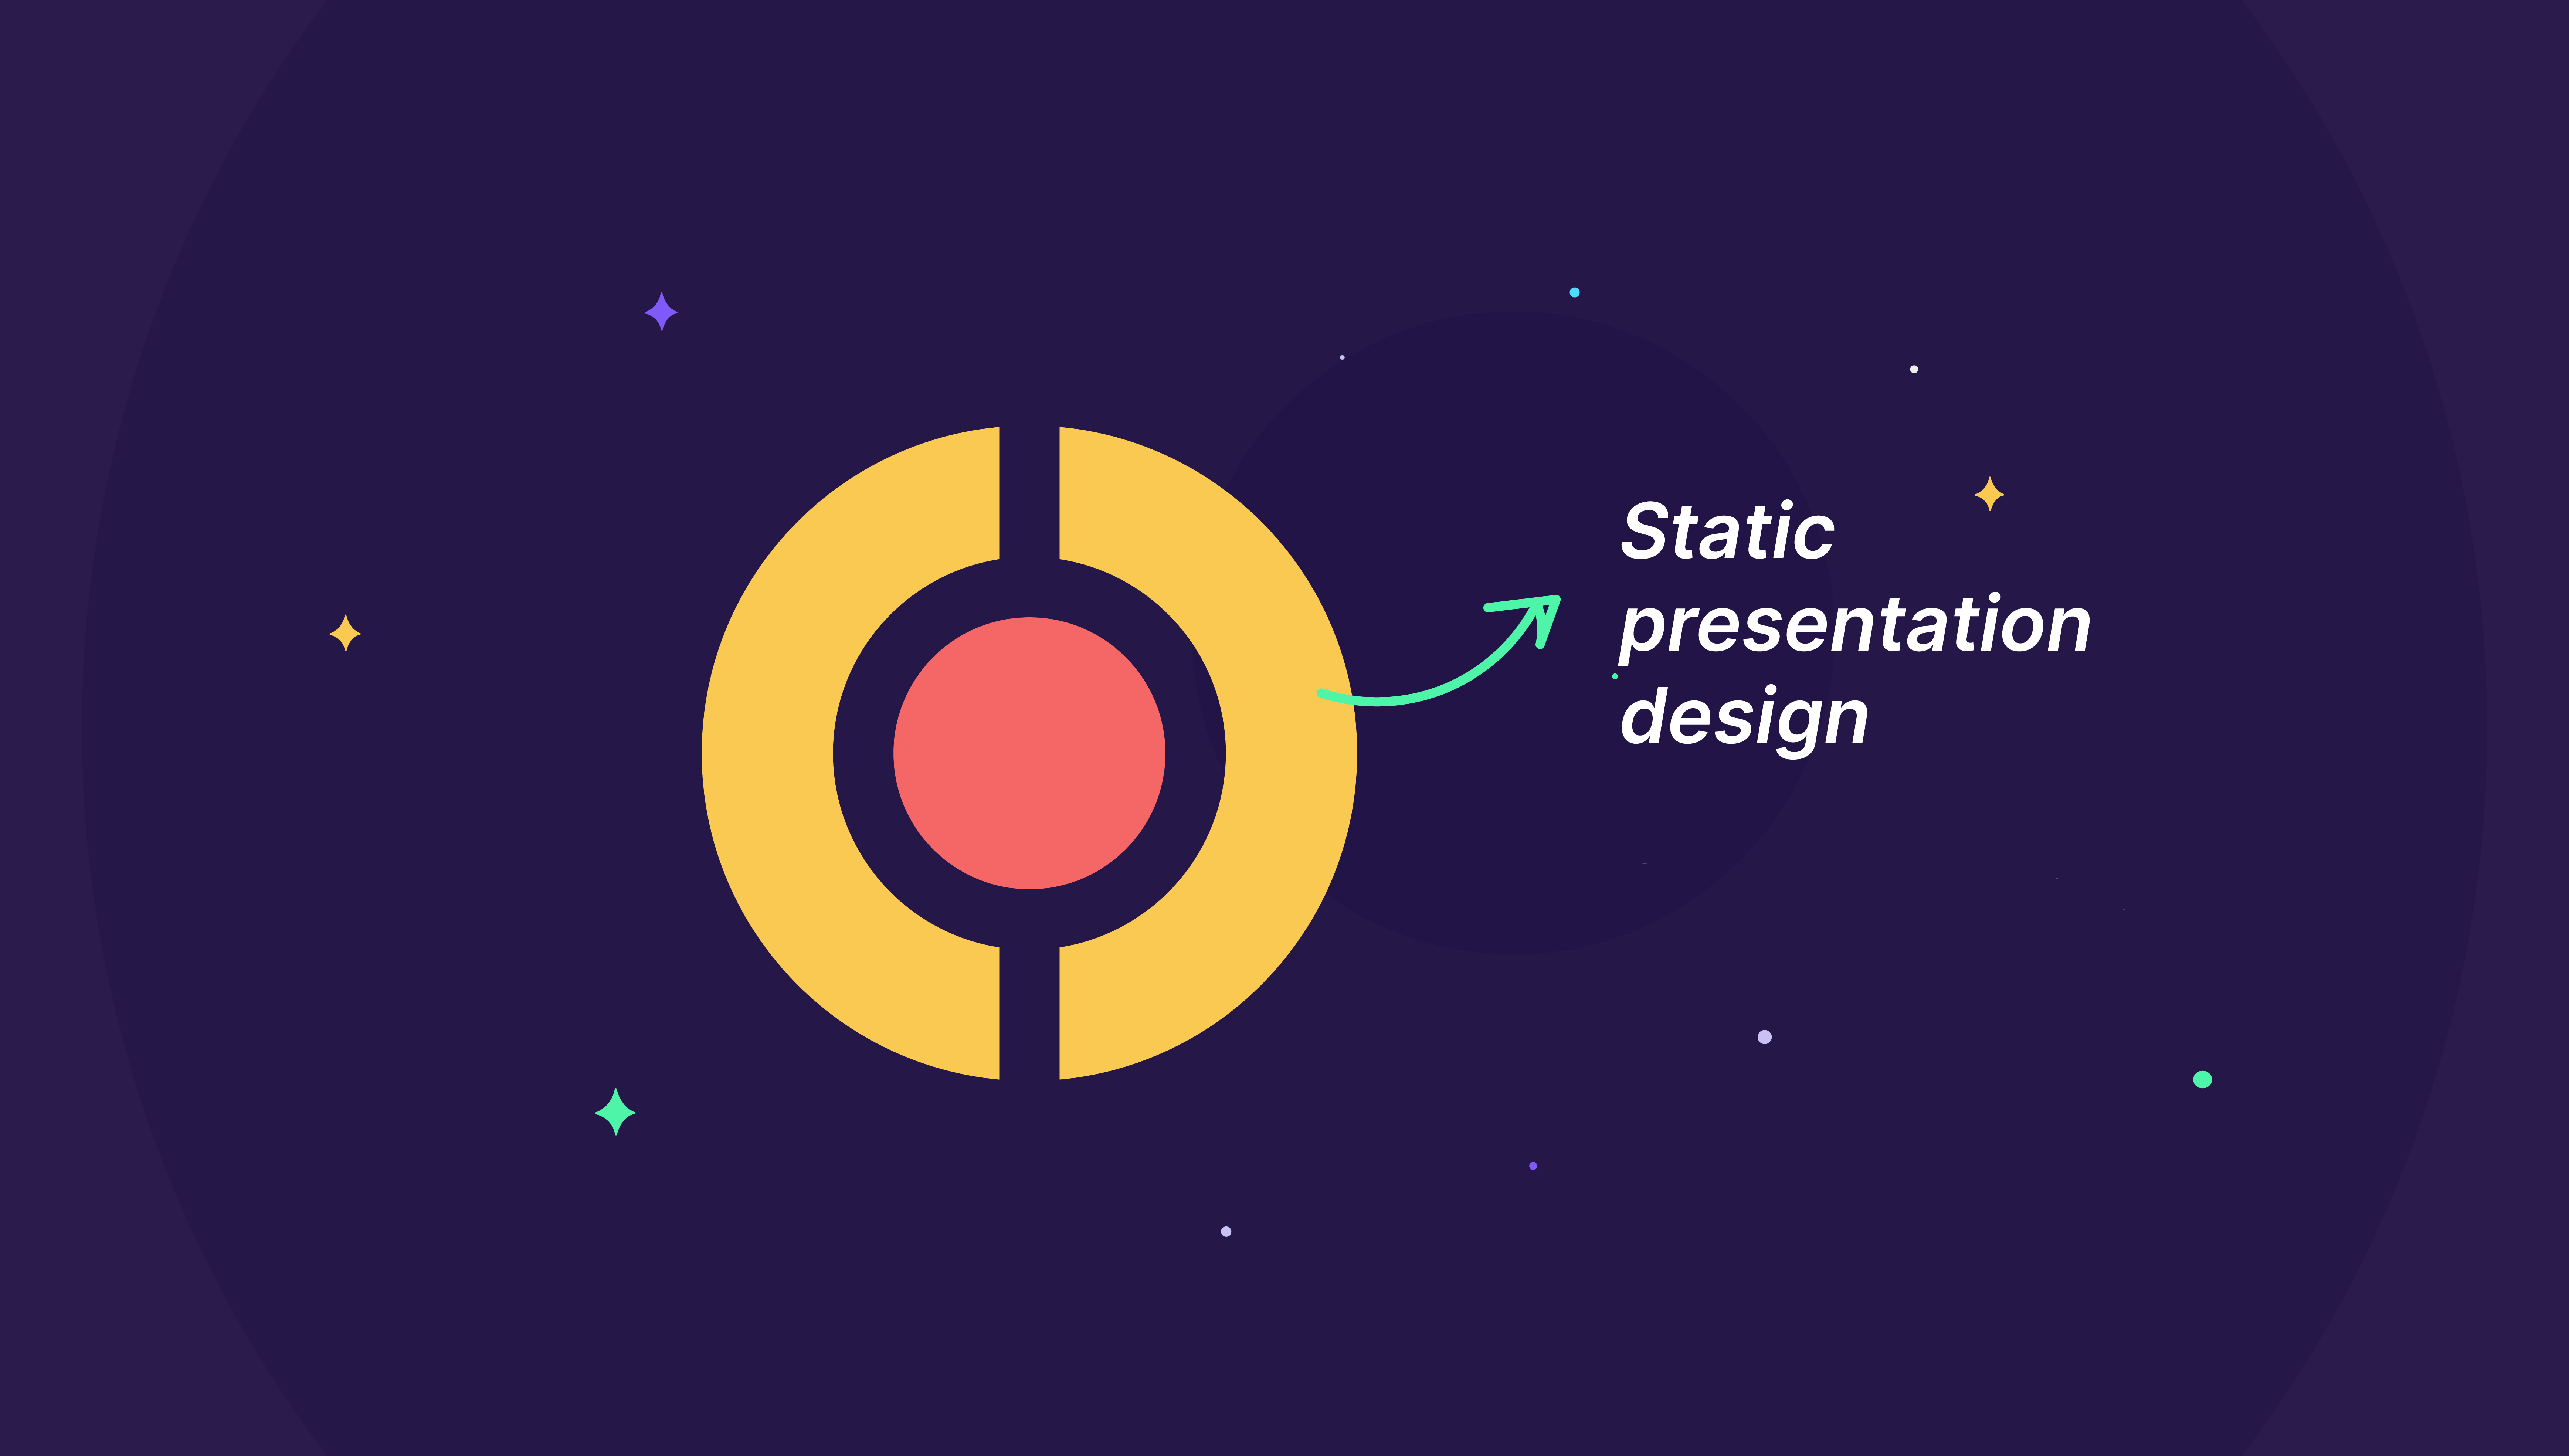 Static presentation design